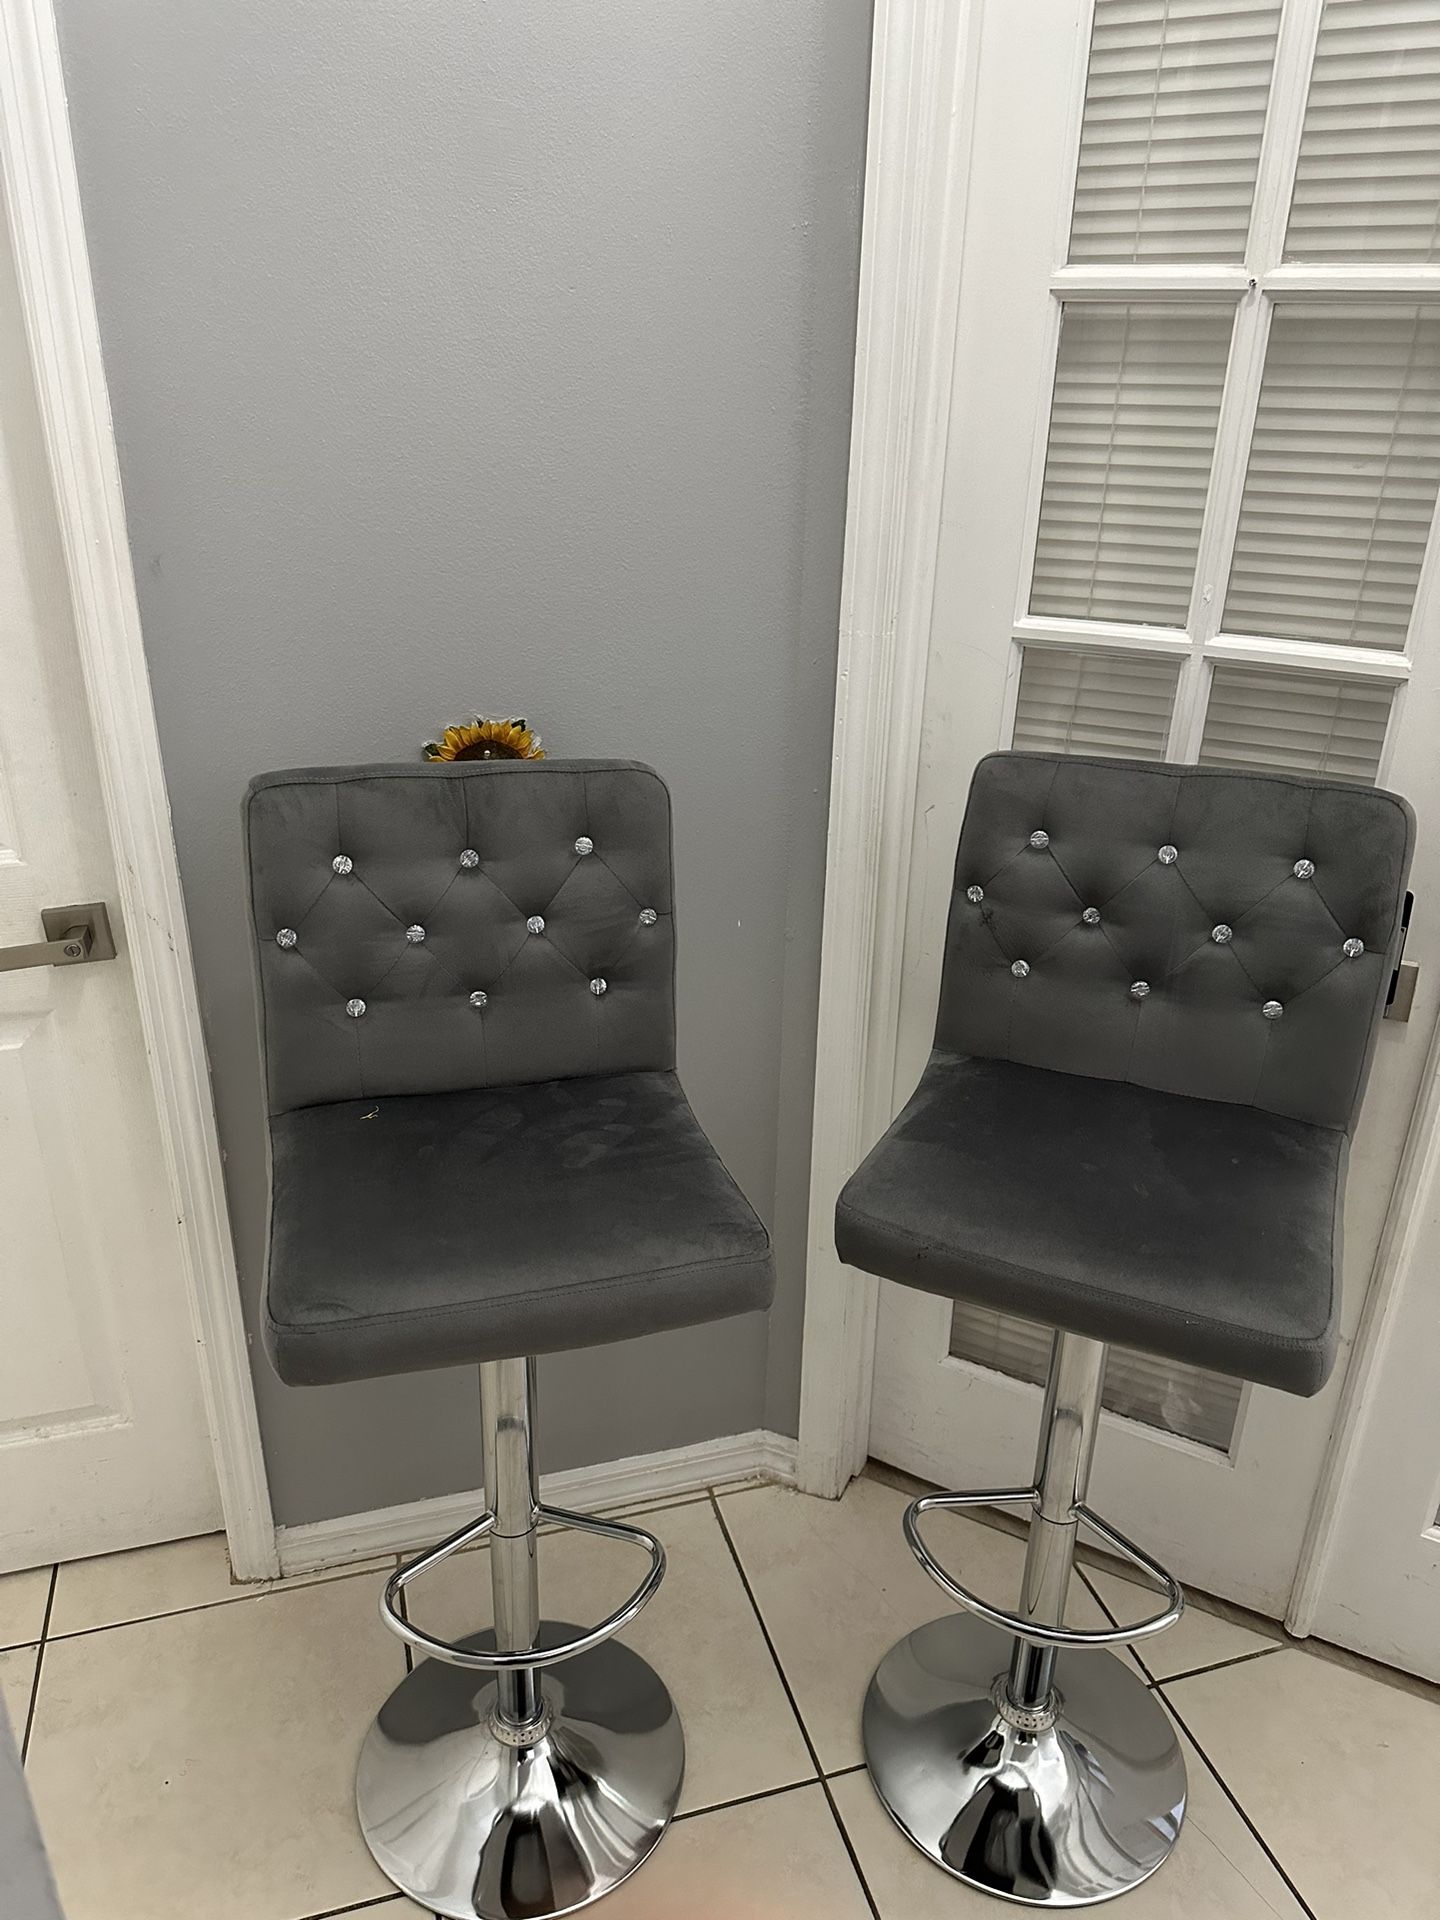 Gray Bar Chairs